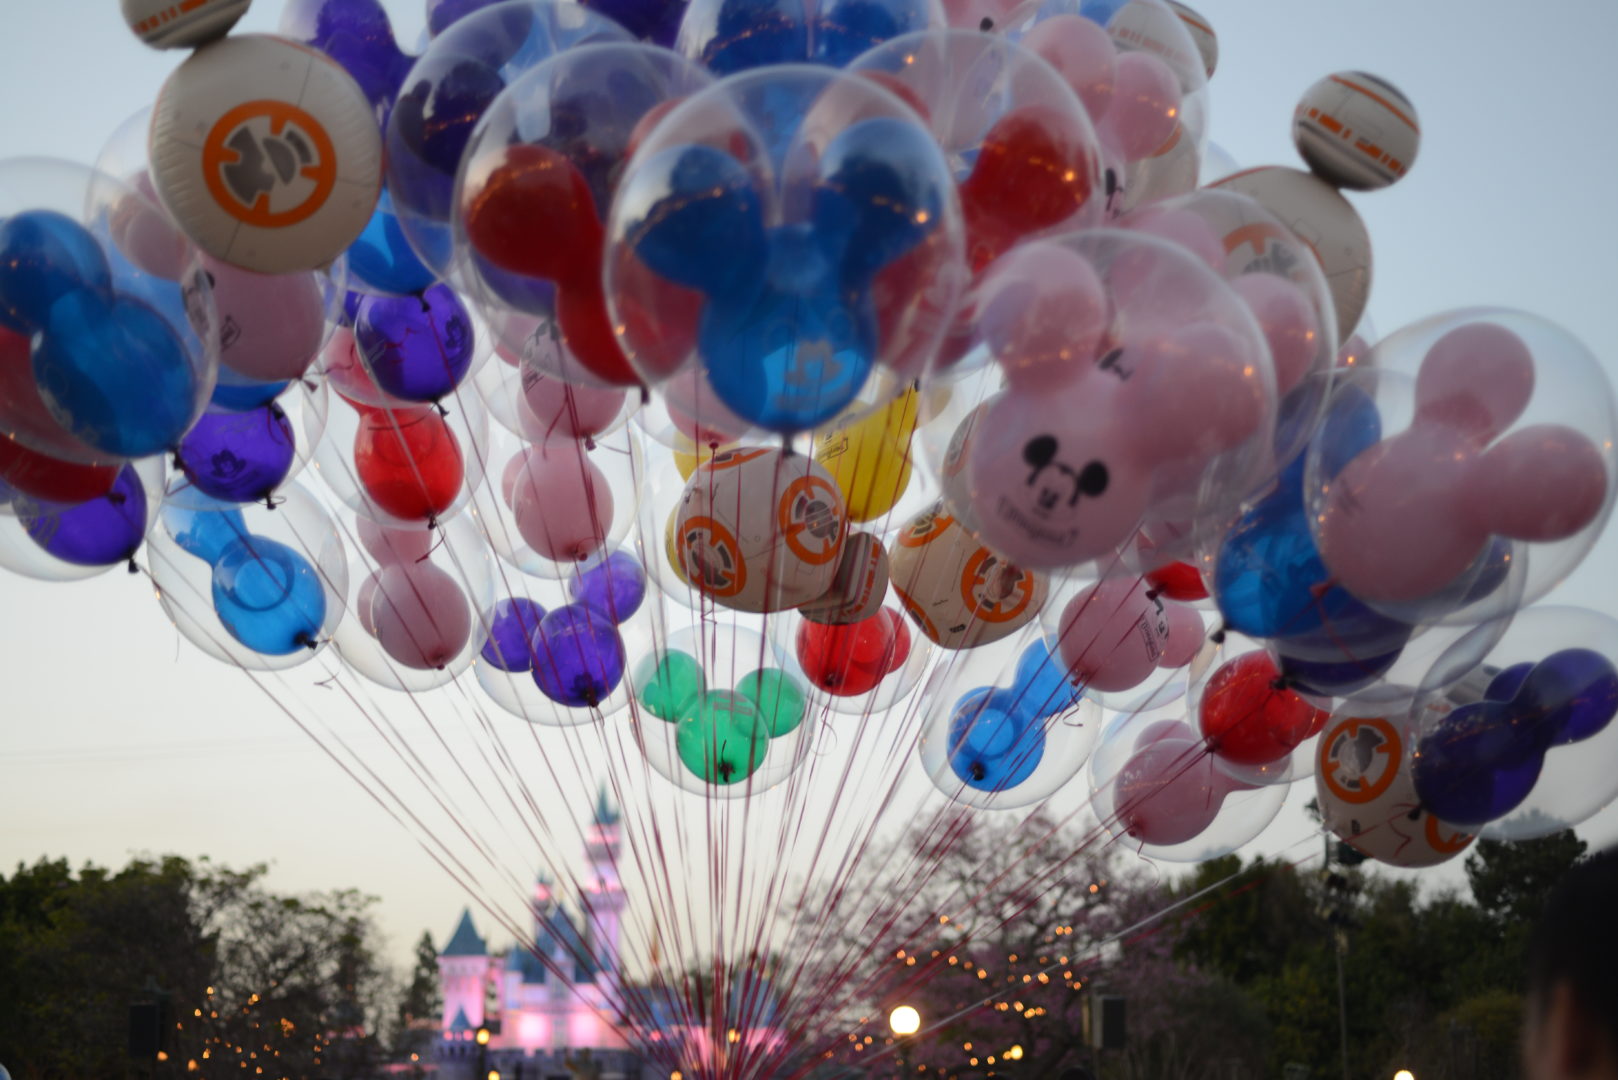 Huge Bouquet of Disneyland Balloons in front of Sleeping Beauty Castle at Dusk